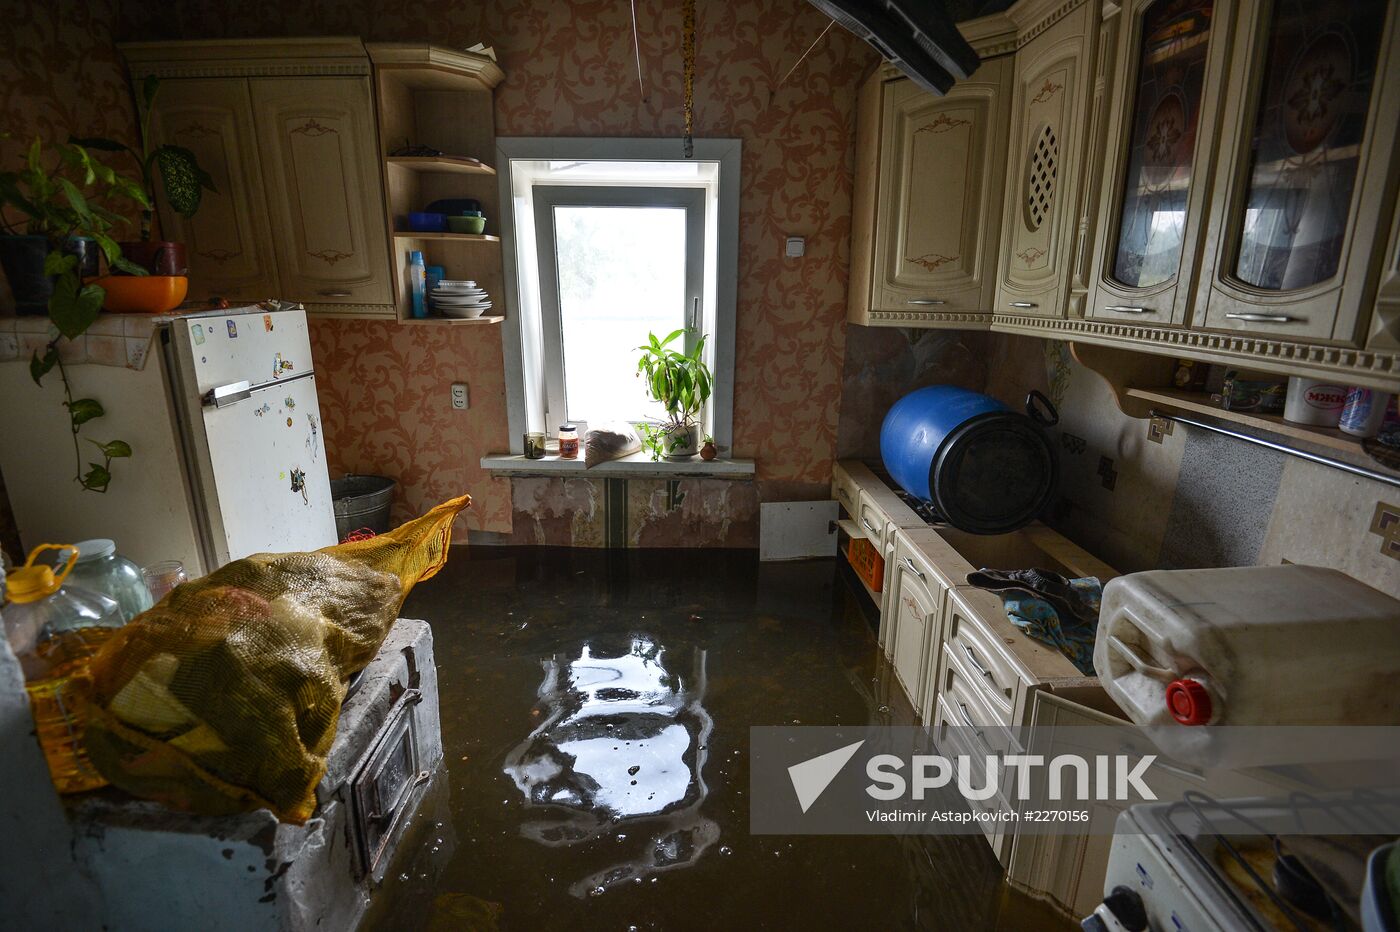 Flood in Khabarovsk Region